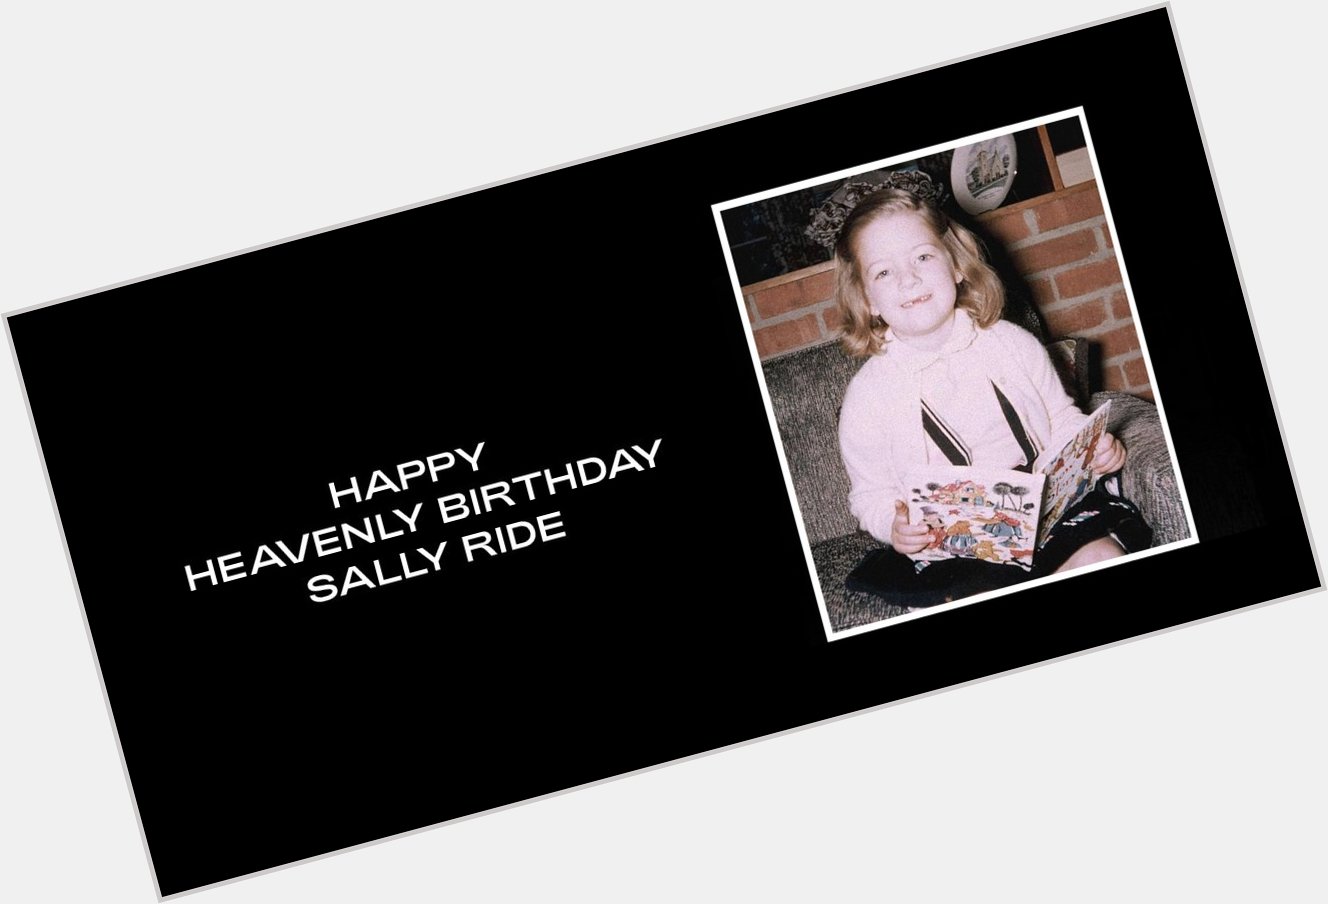 Happy Heavenly Birthday, Sally Ride. 